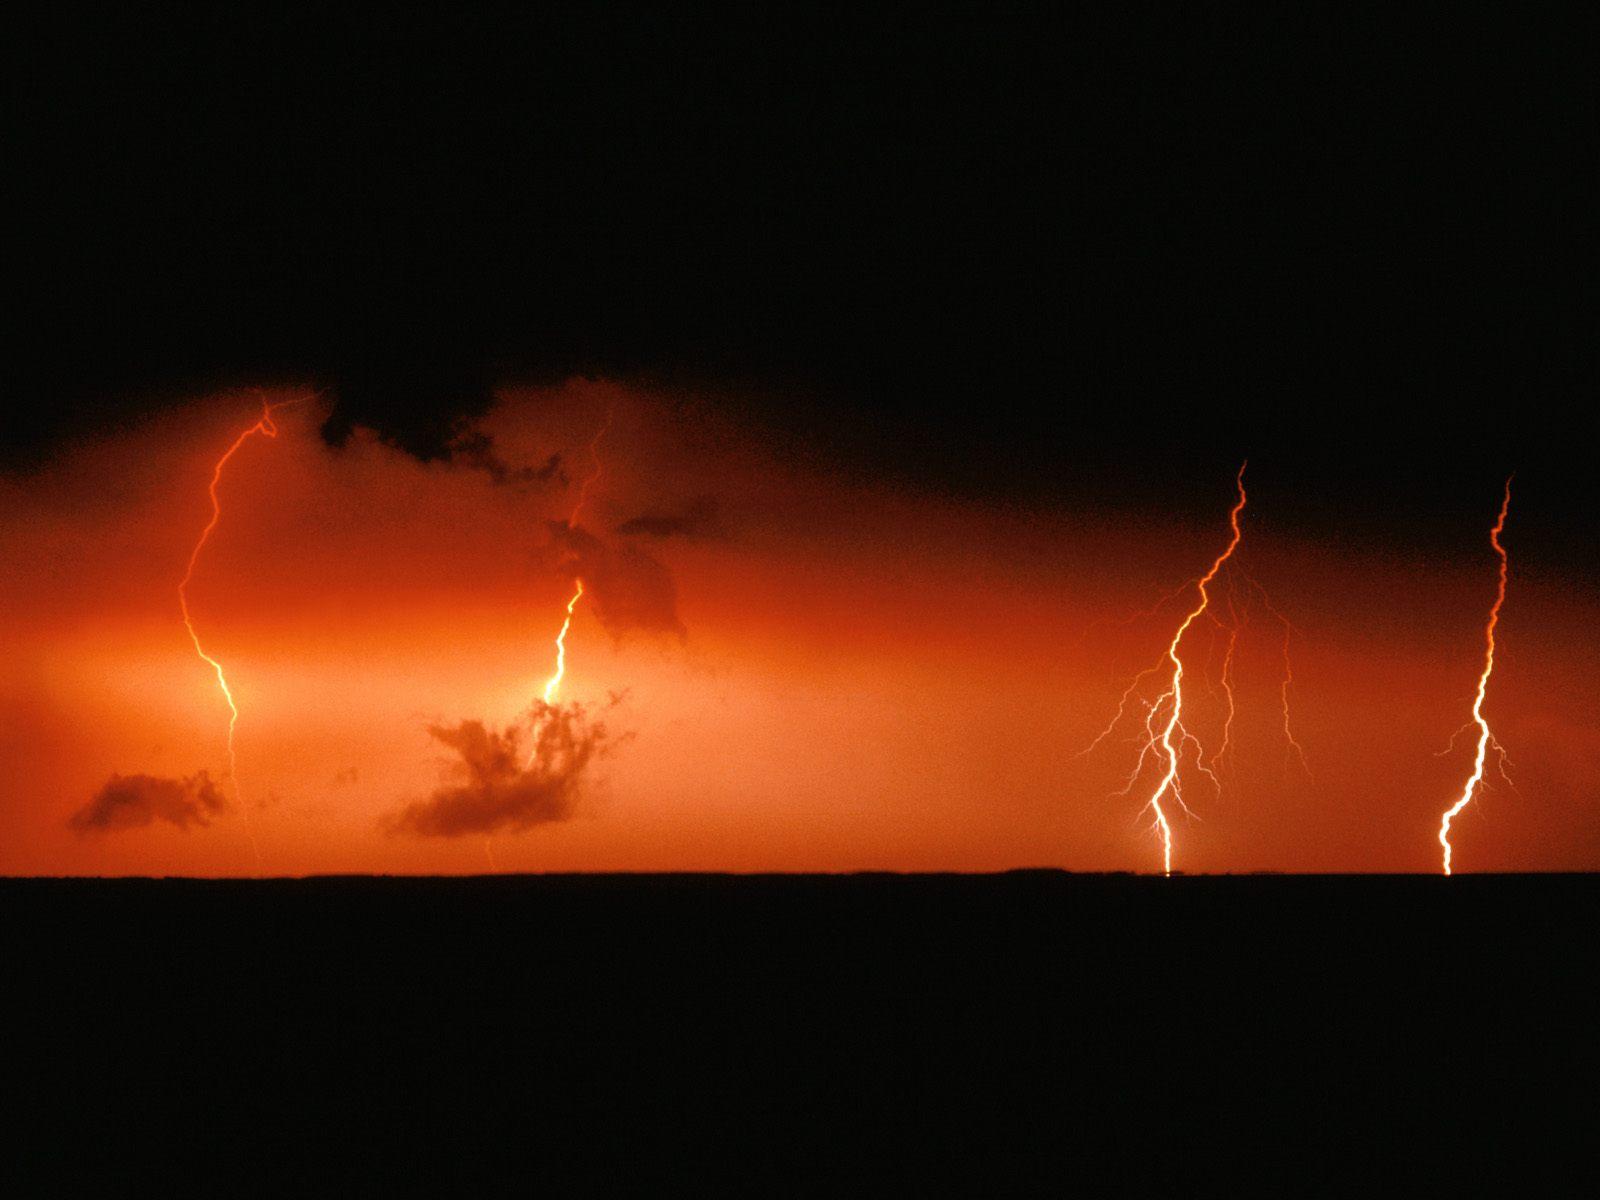 Lightning bolts lightening strike free desktop background